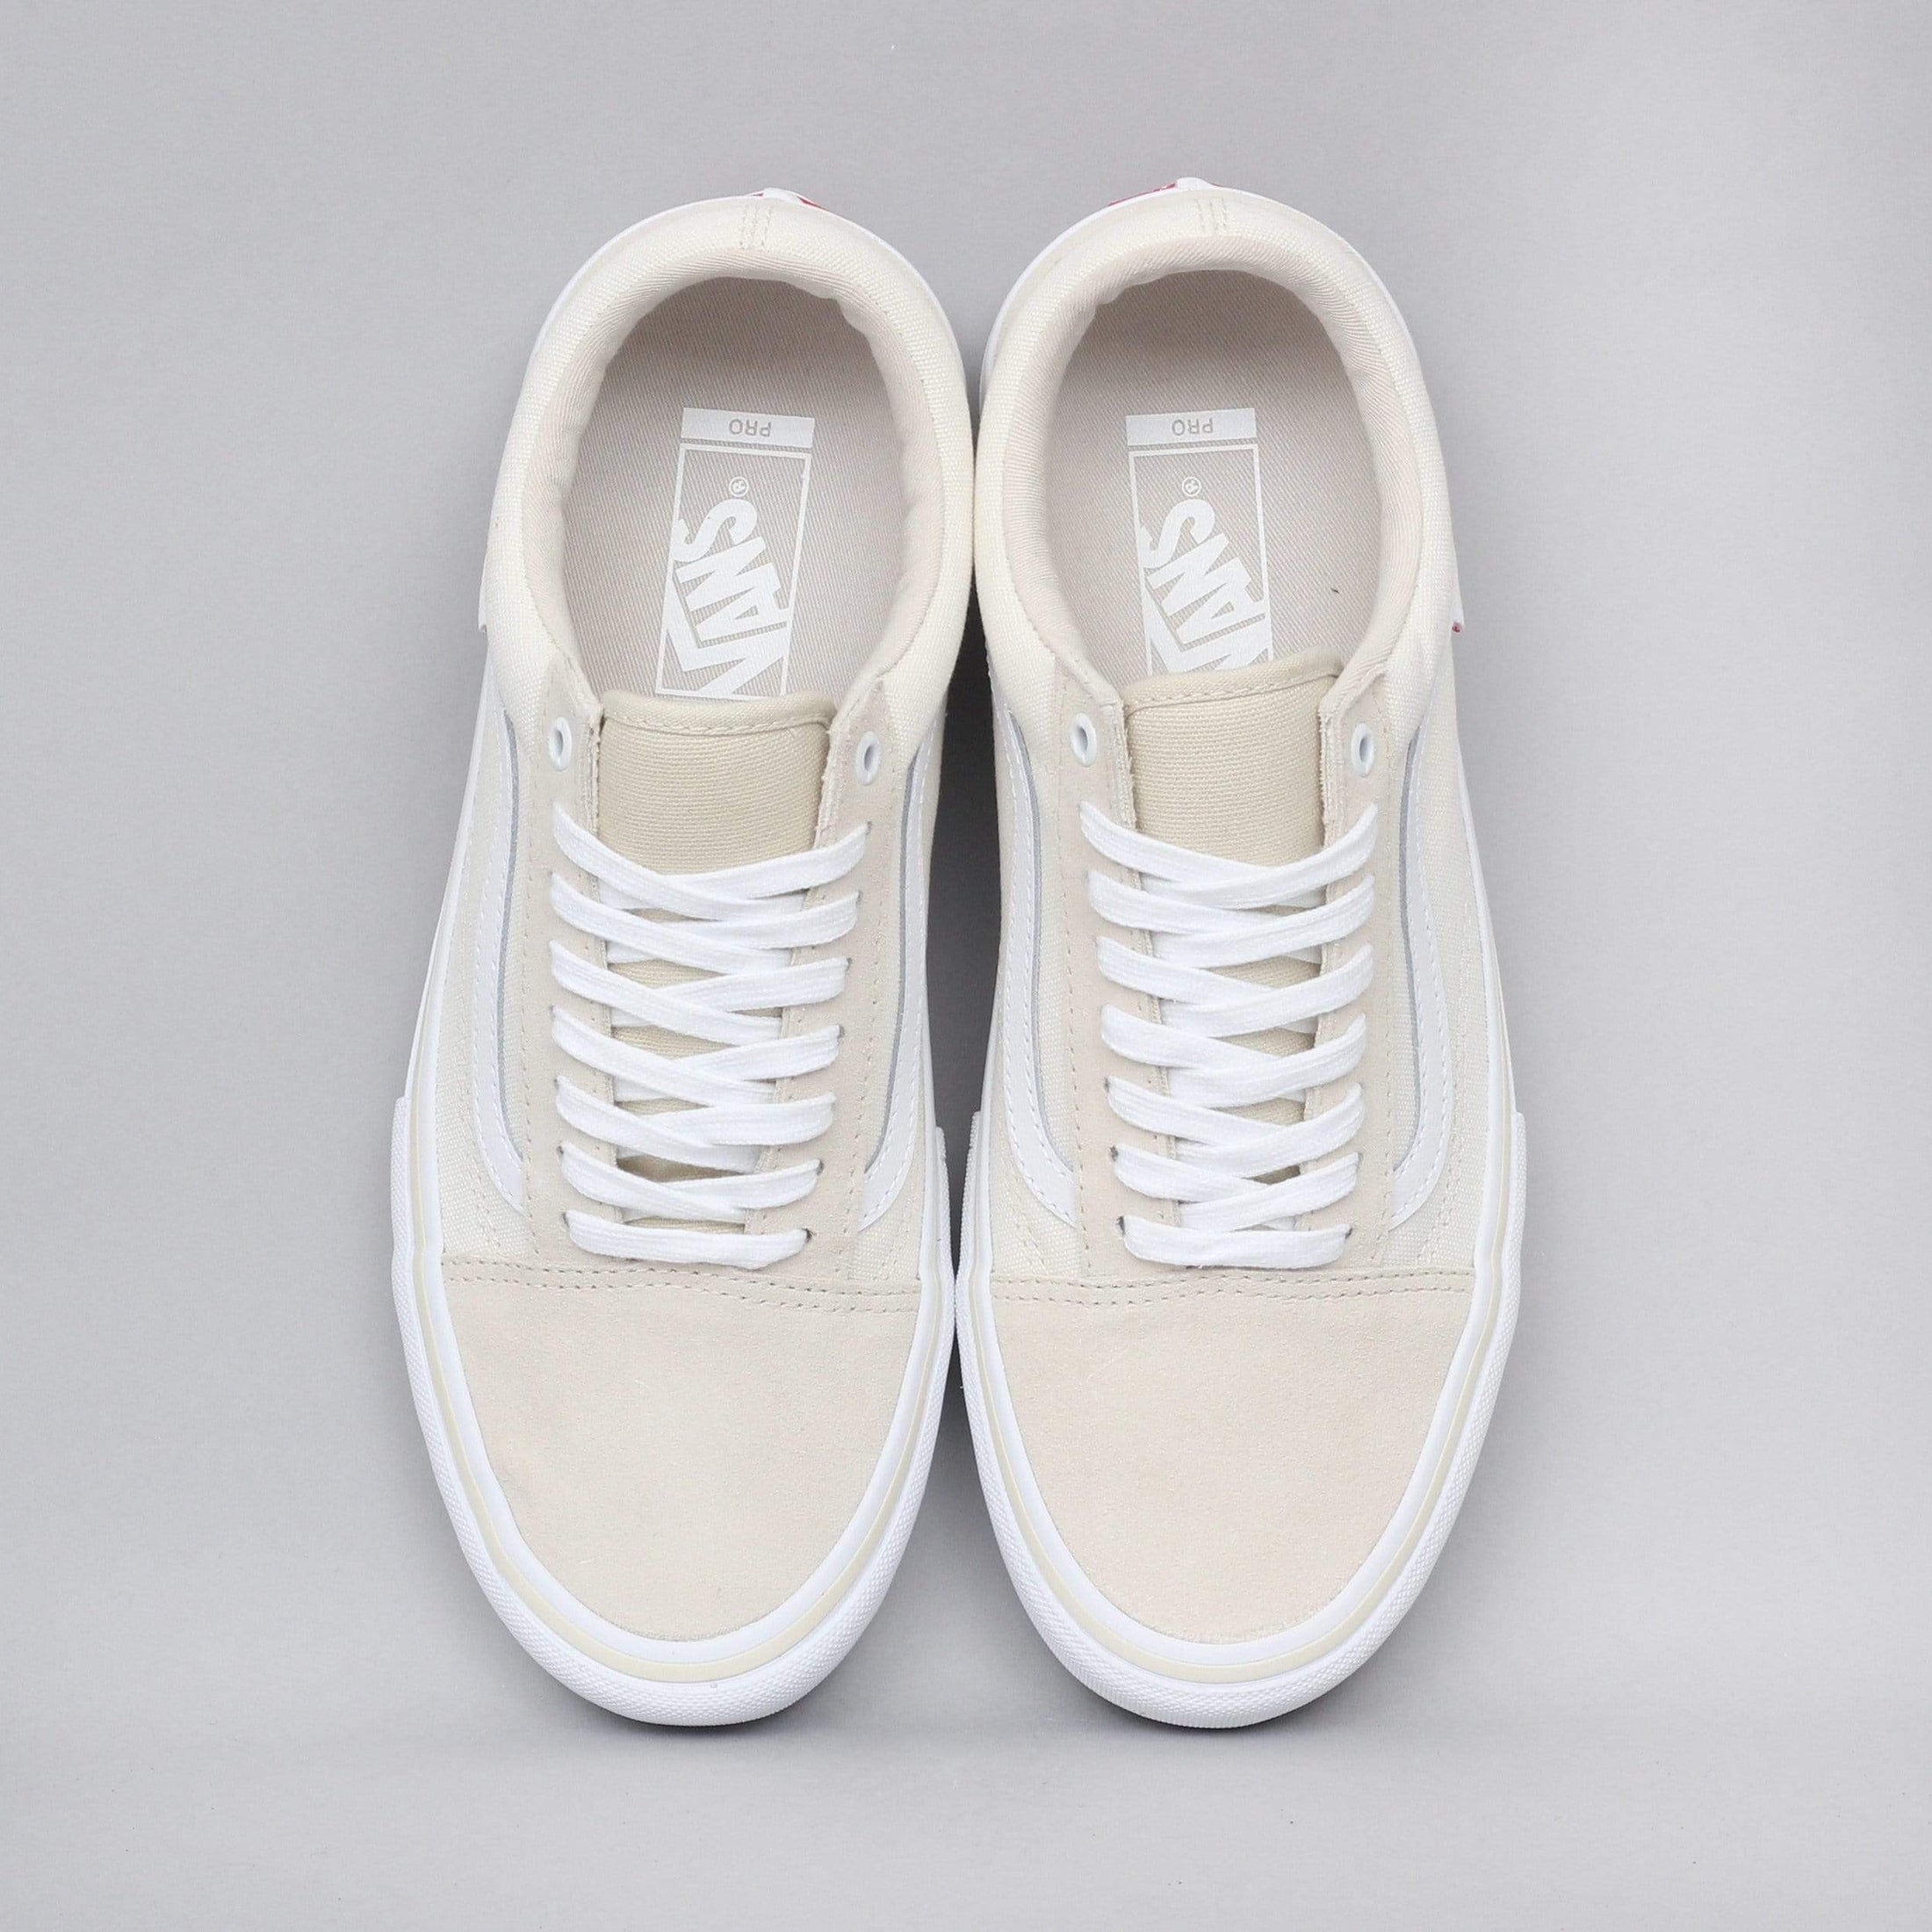 Vans Old Skool Pro Shoes Marshmallow / White